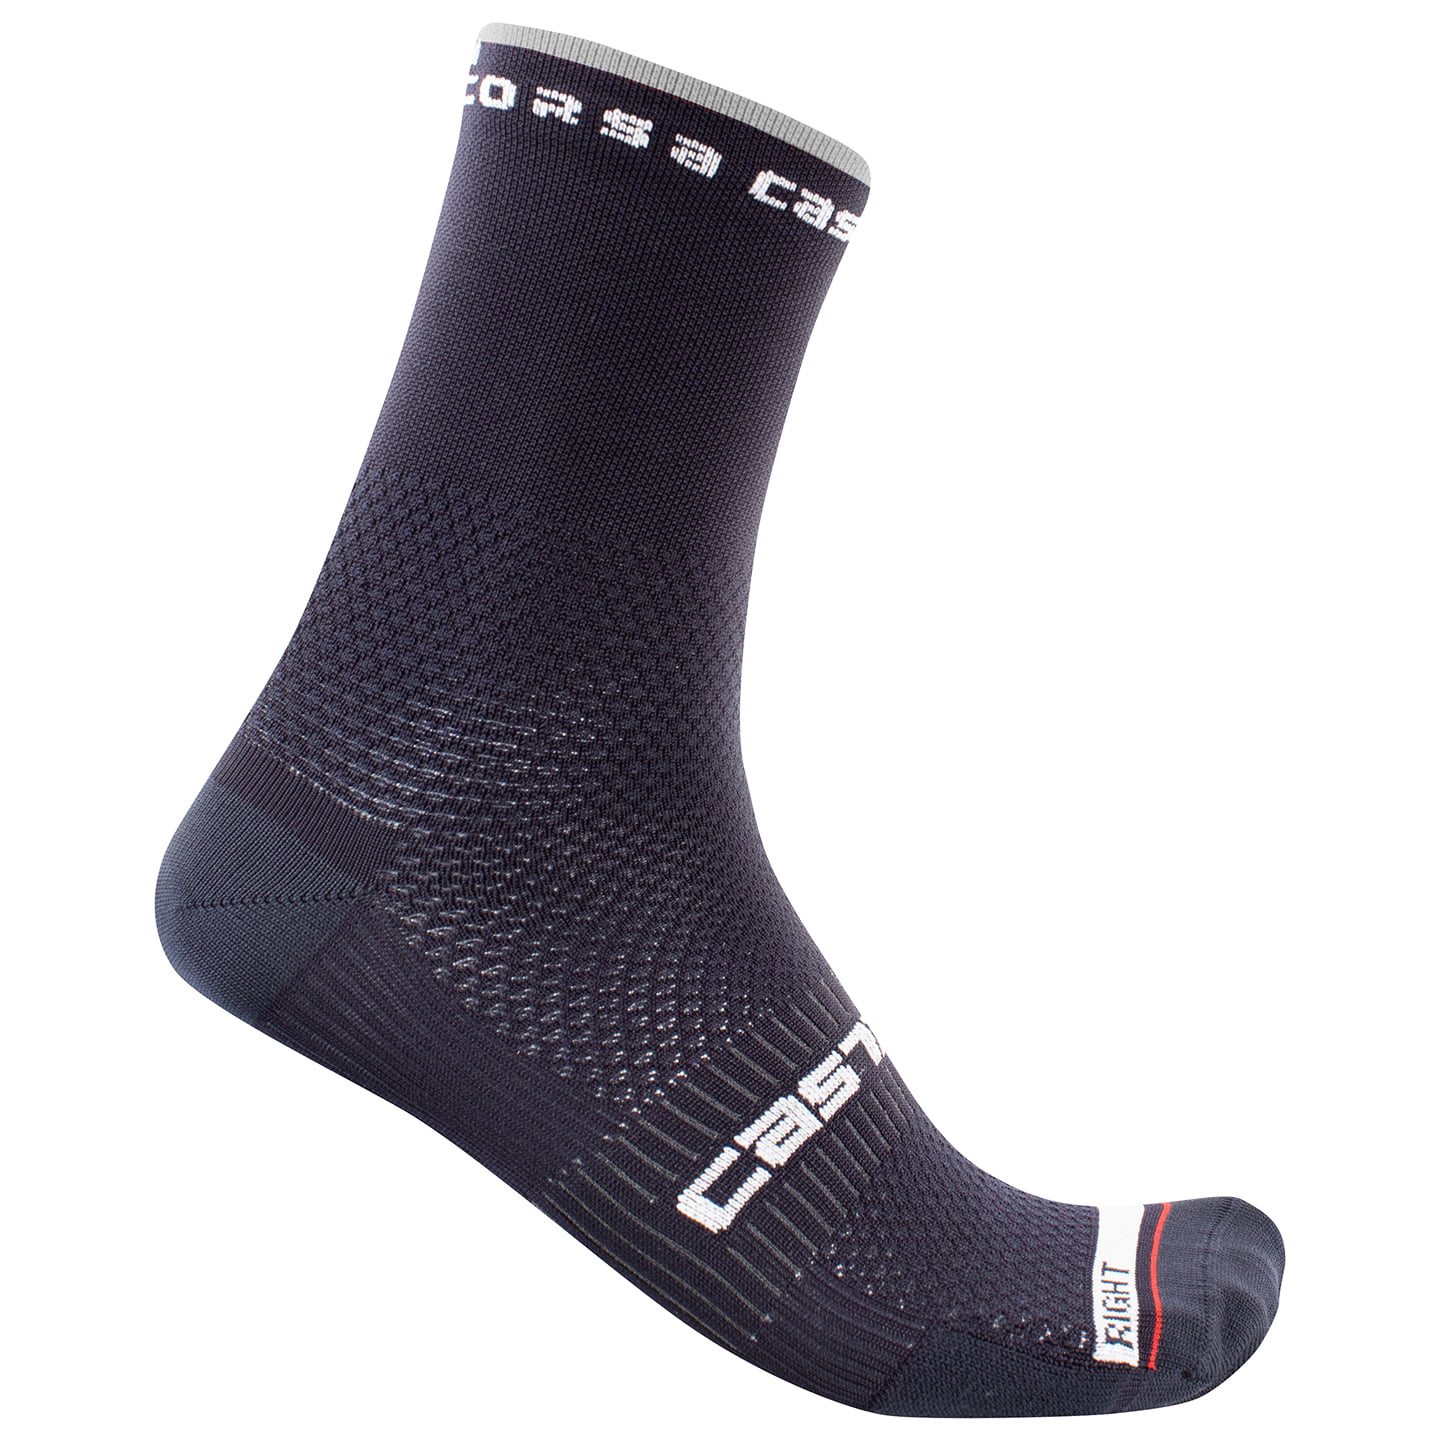 Rosso Corsa 15 Cycling Socks Cycling Socks, for men, size L-XL, MTB socks, Bike gear